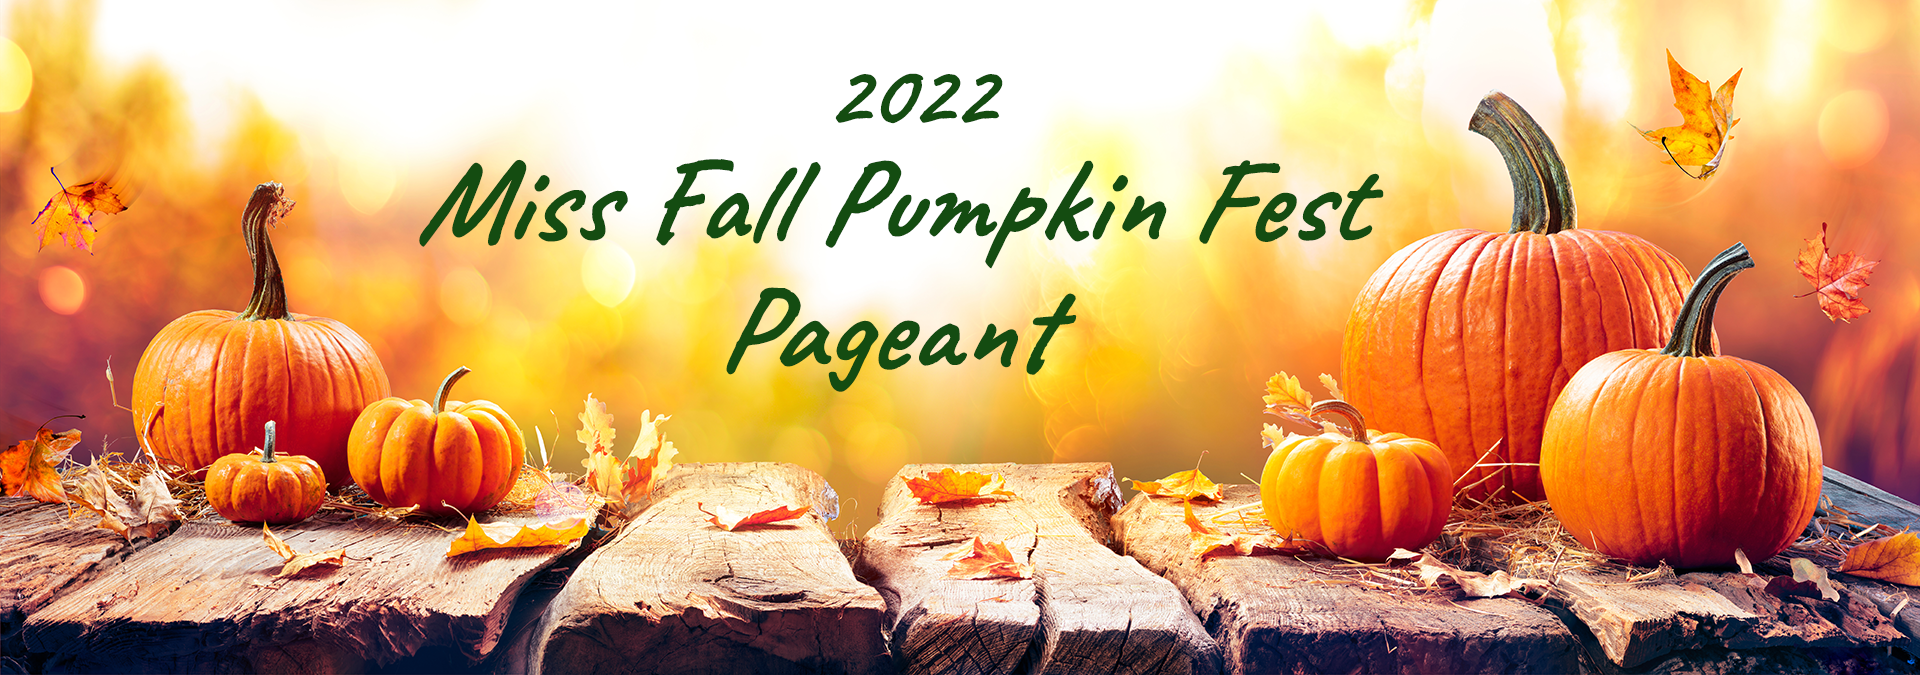 Miss Fall Pumpkin Fest Pageant